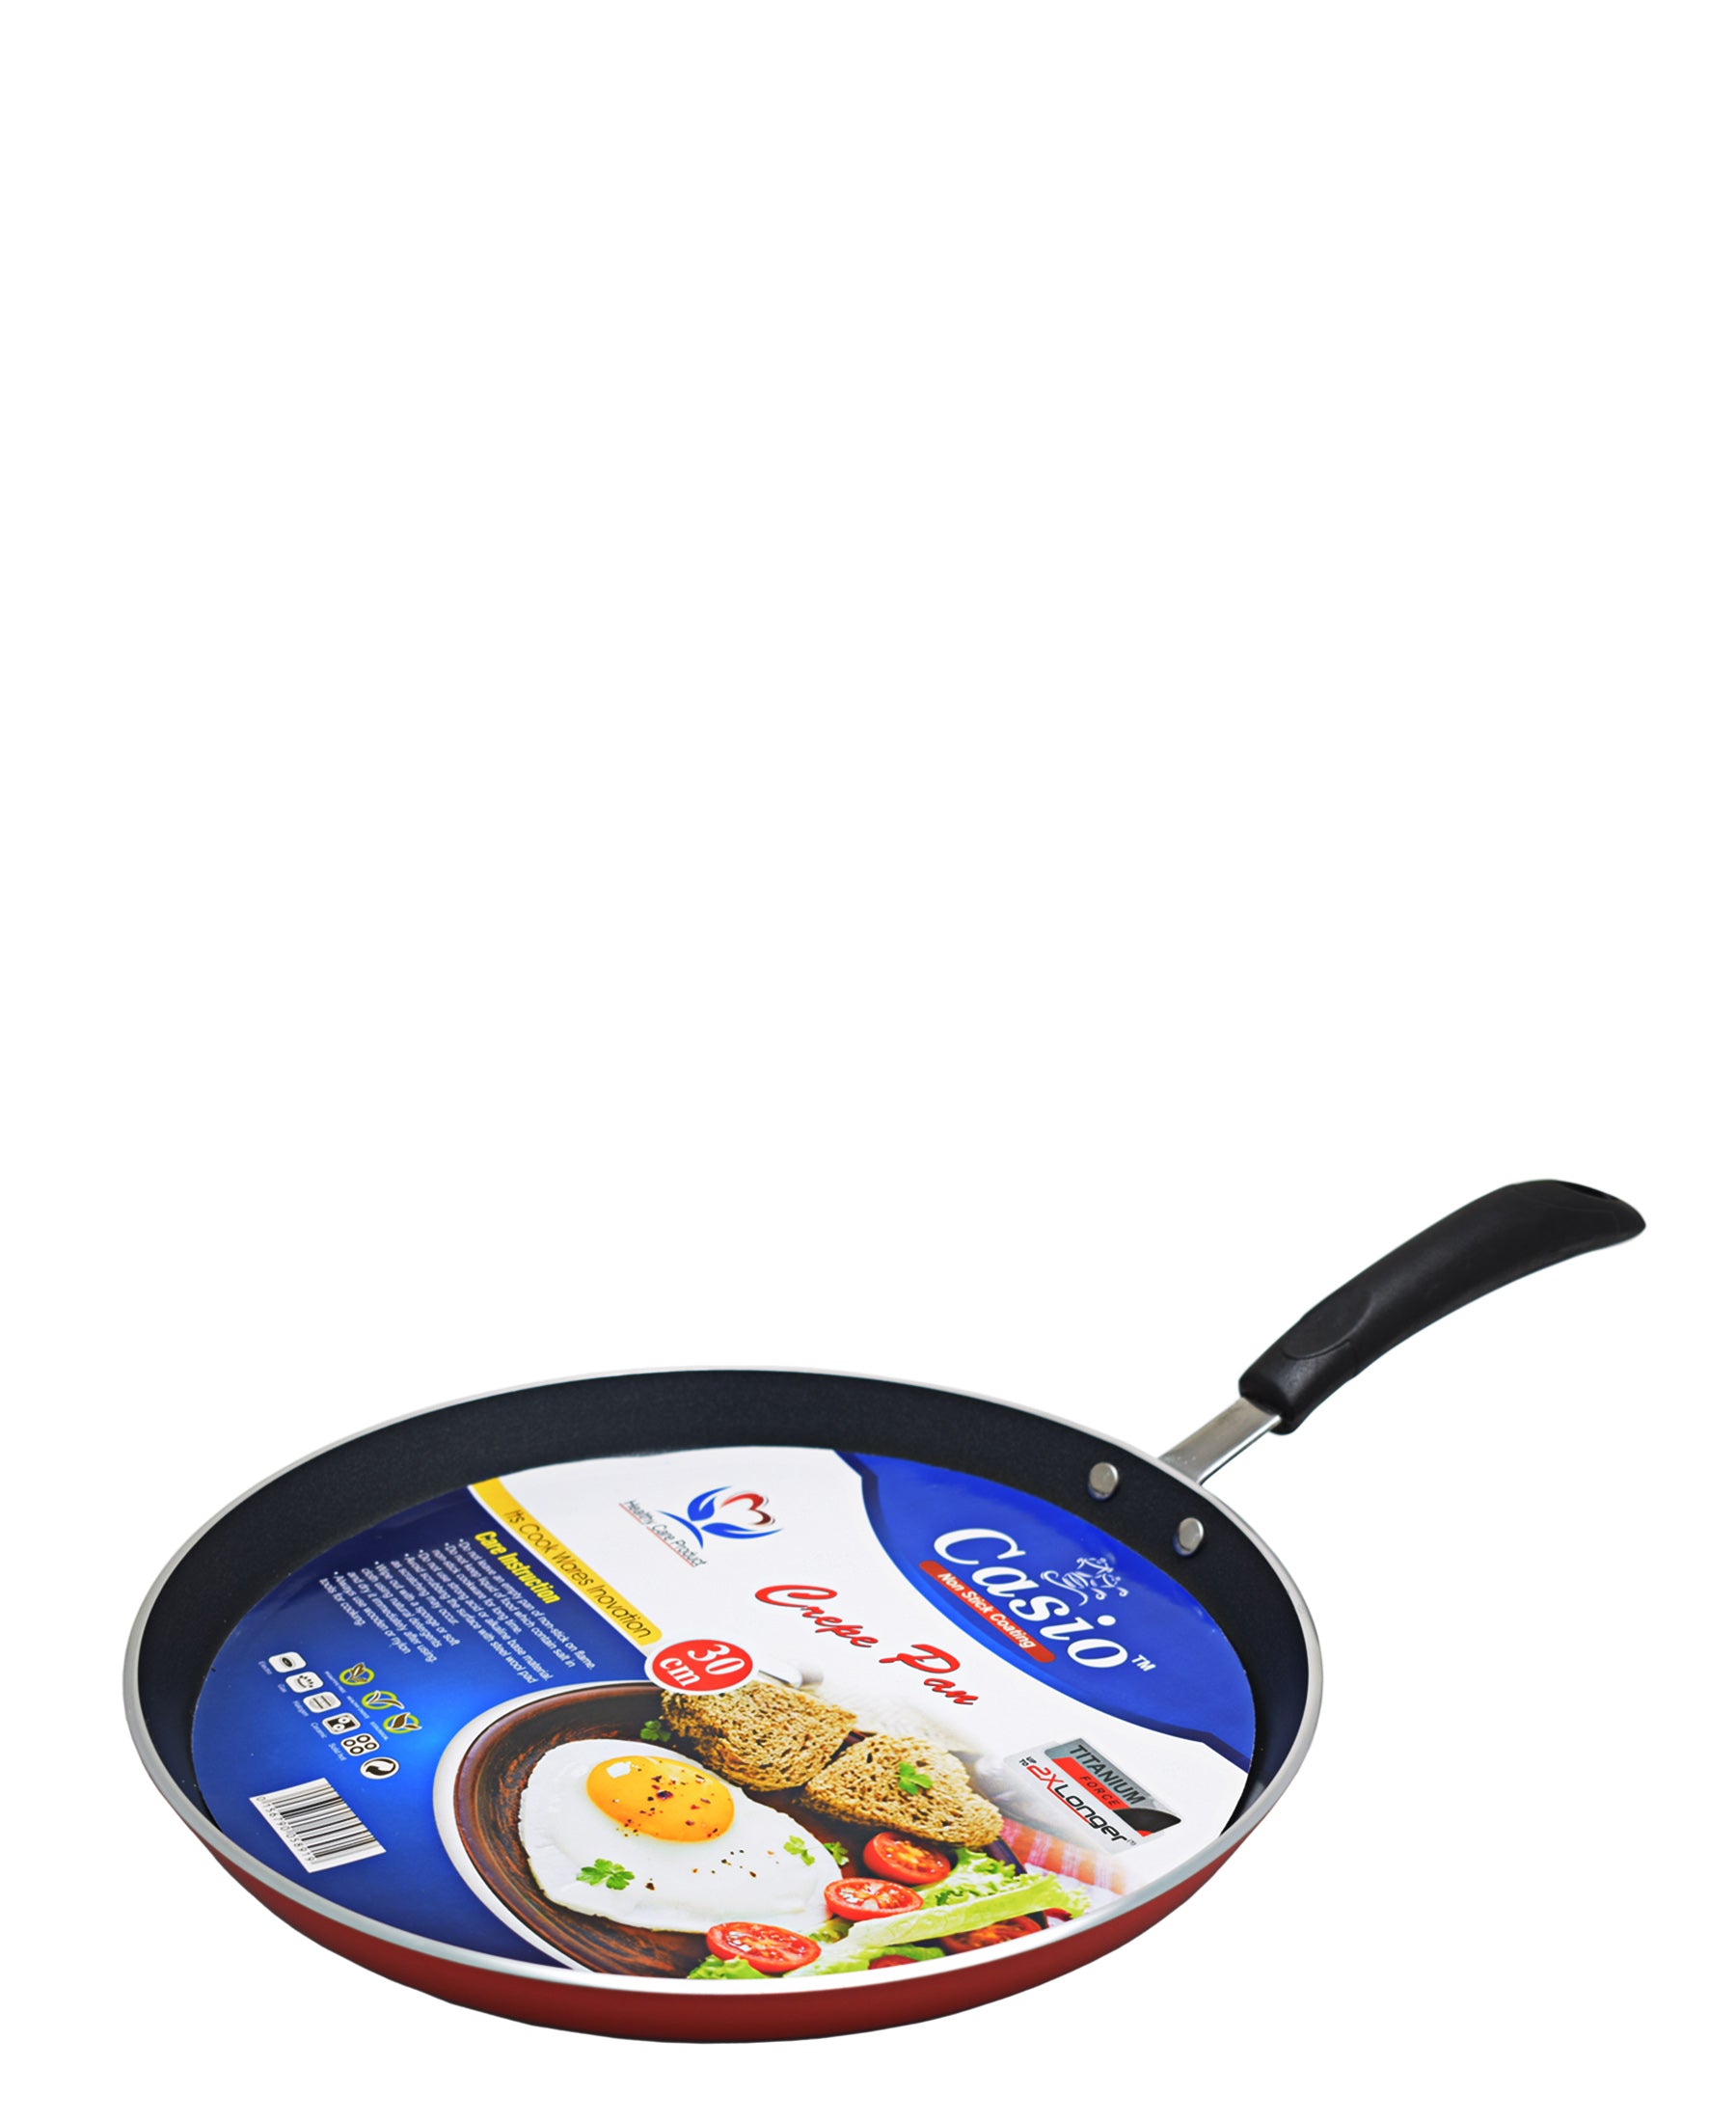 Casio Frying Pan 30cm - Black